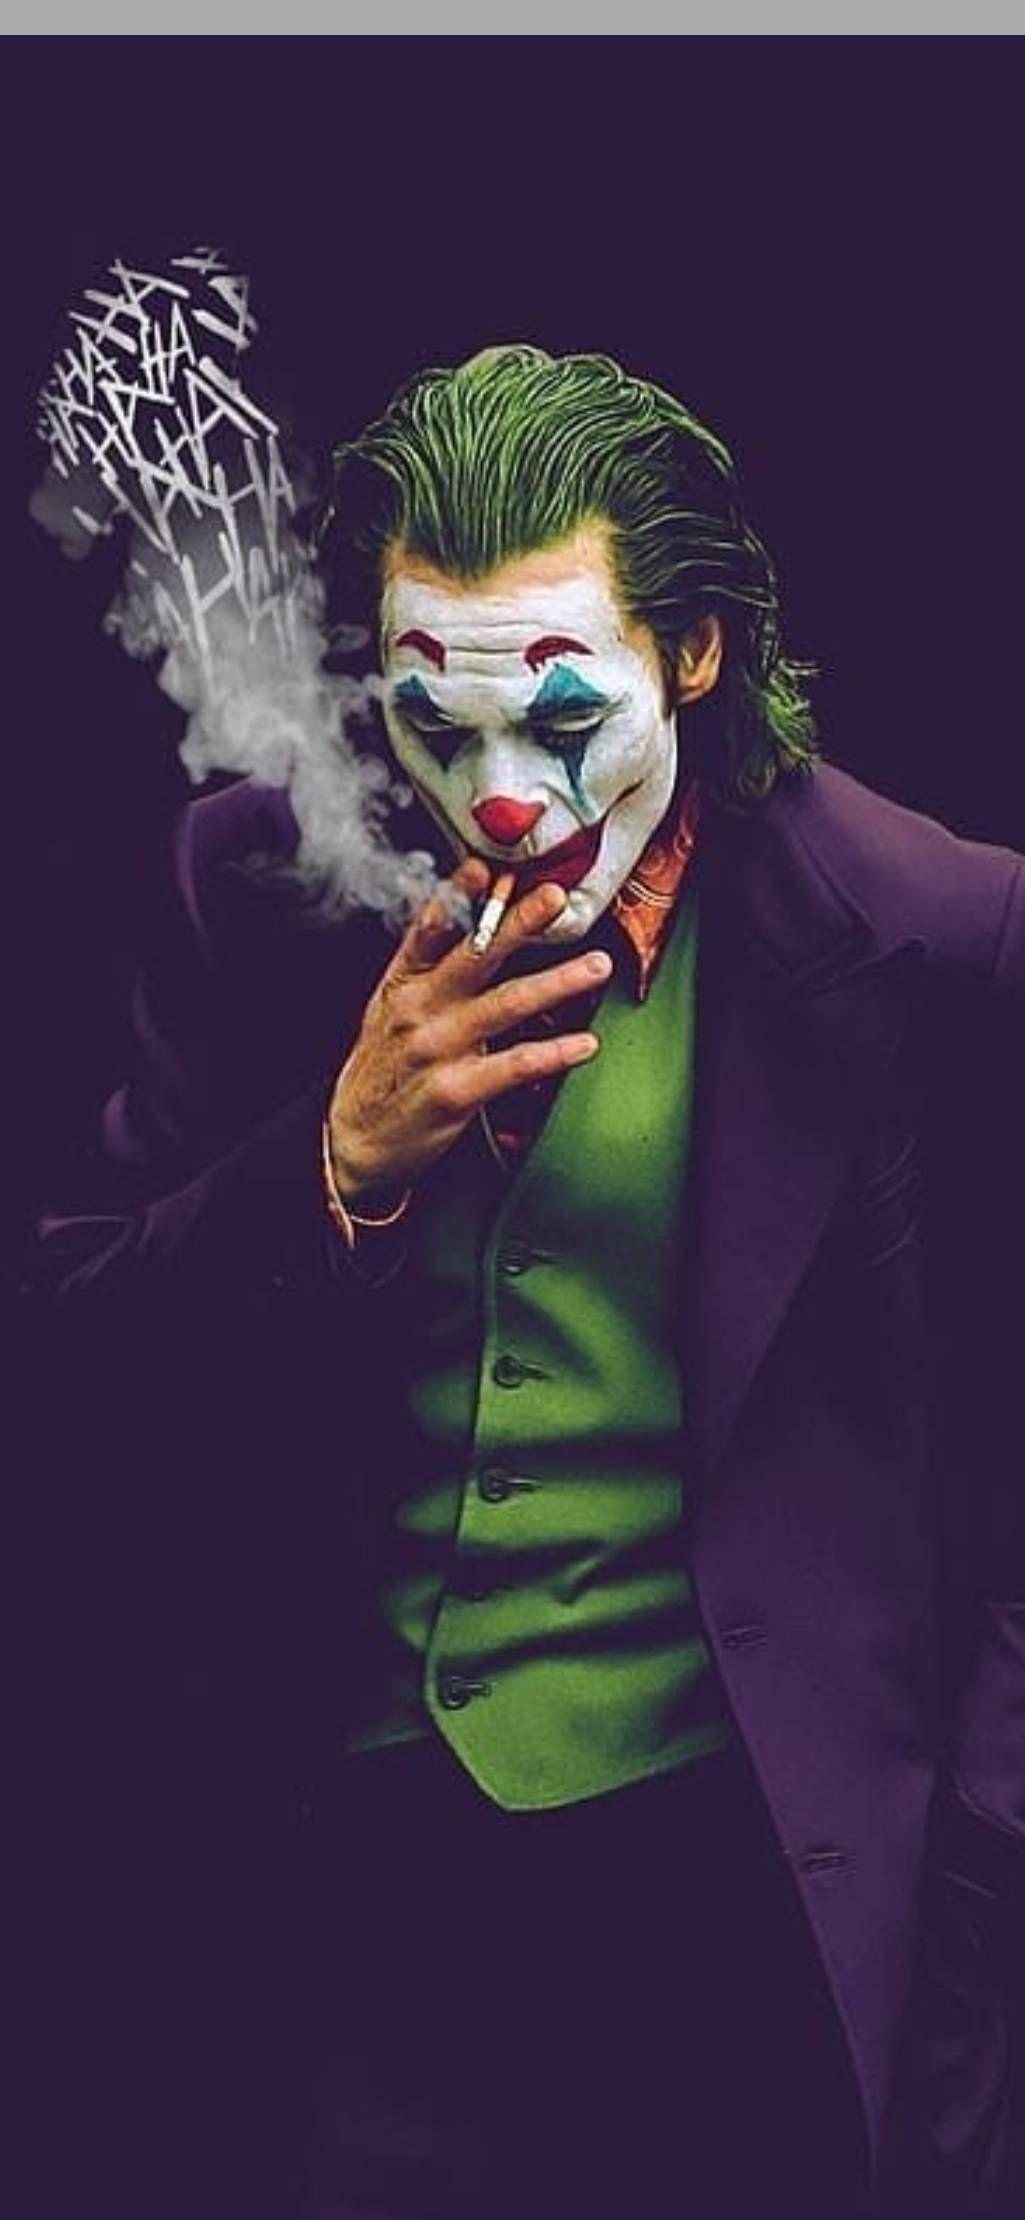 Joker 2019 Wallpaper HD Background Image 70 Pics